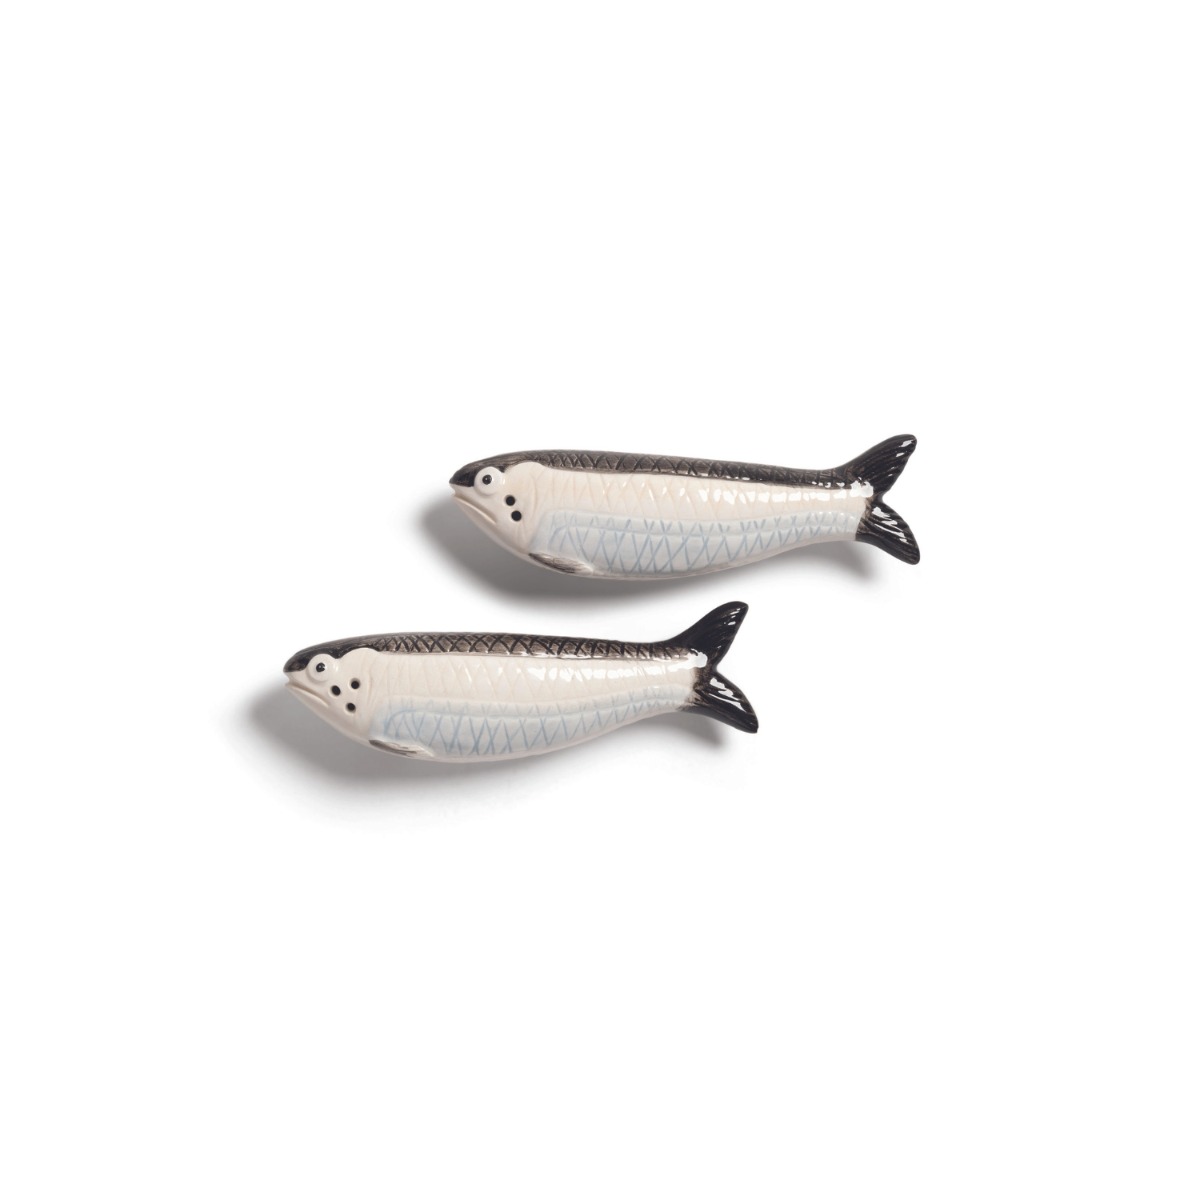 Salt & peppar sardinerproduktzoombild #1